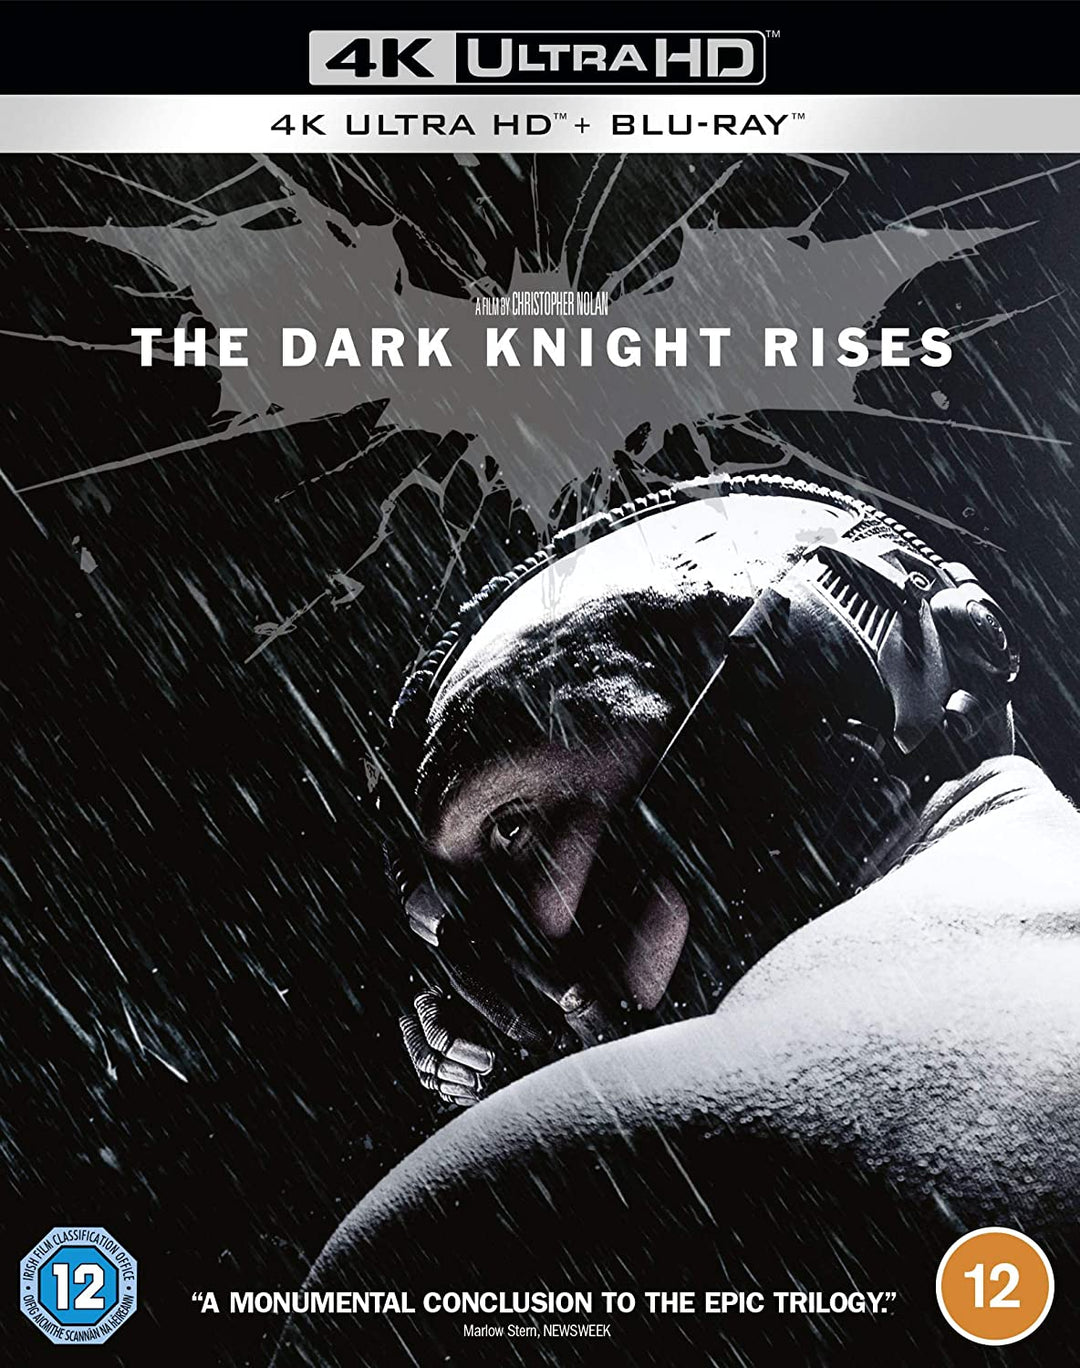 The Dark Knight Rises [2012] [Region Free] – Action/Thriller [Blu-ray]